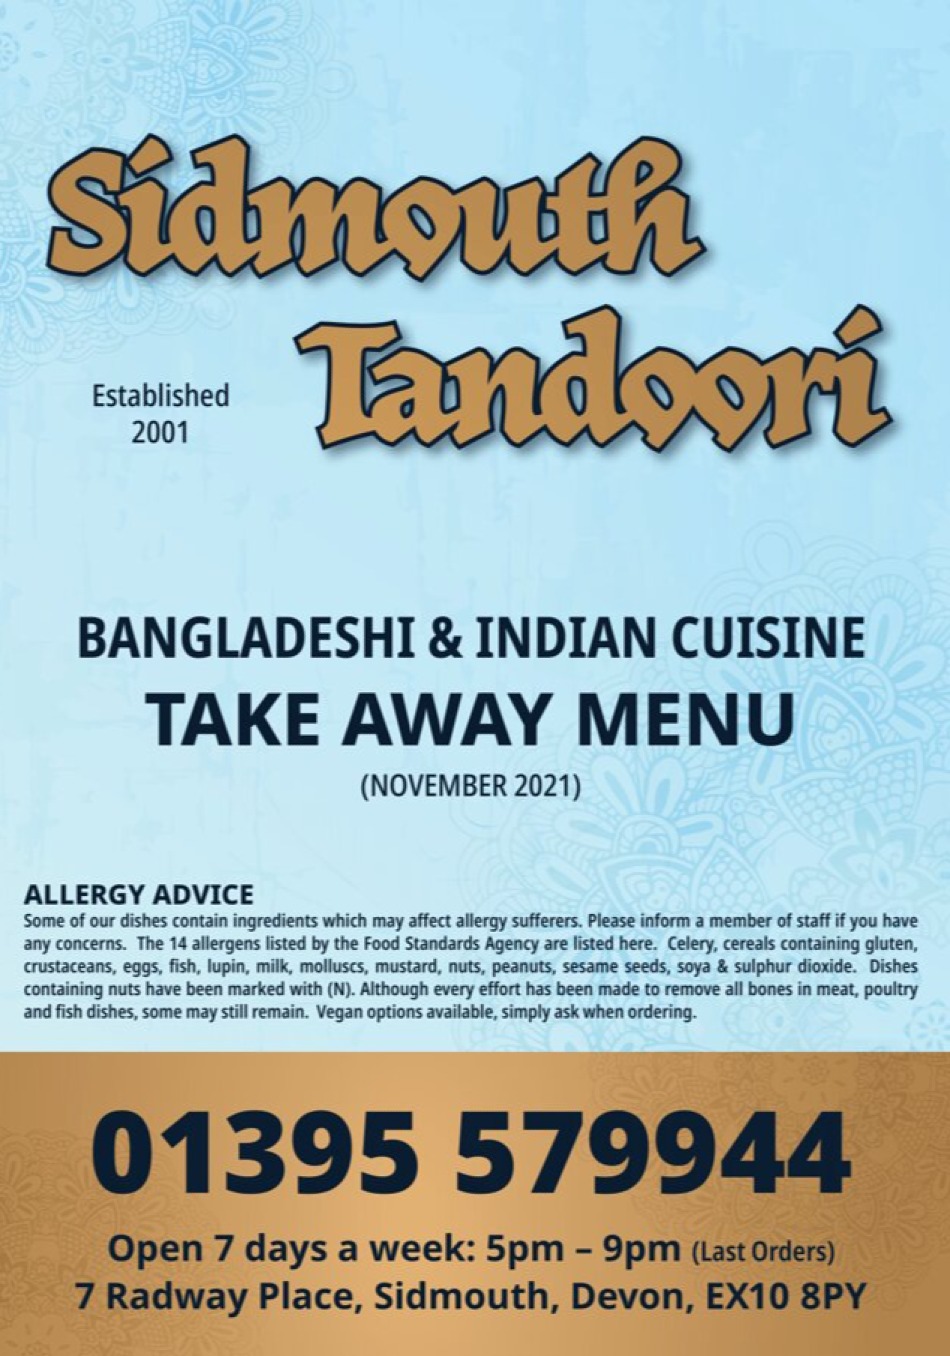 Takeaway Restaurant Menu Page - Sidmouth Tandoori - Sidmouth